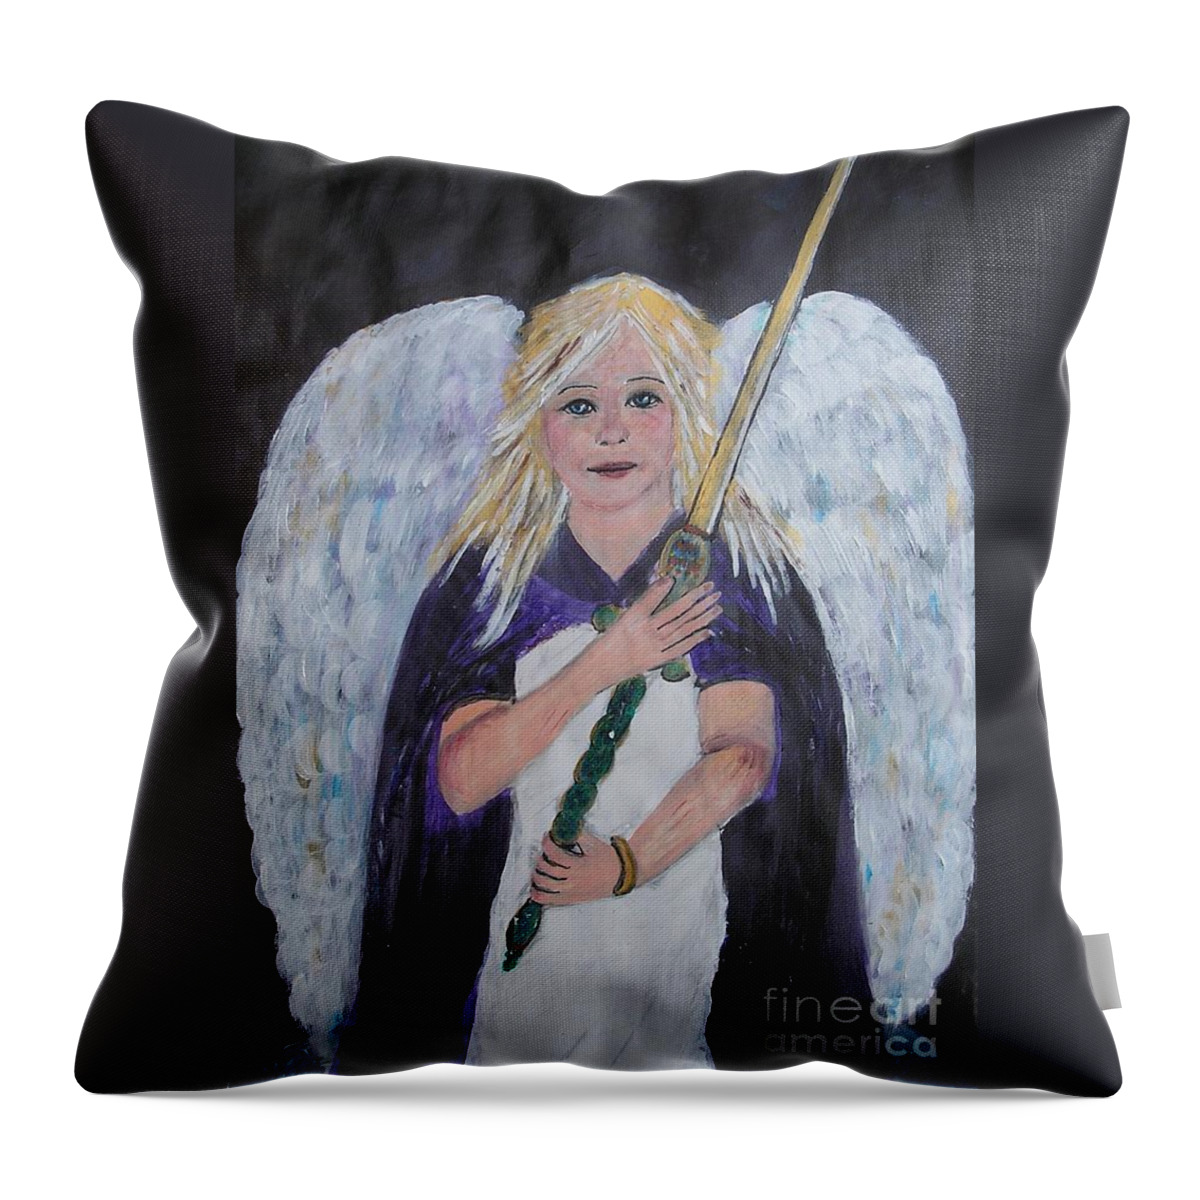 Angel Throw Pillow featuring the painting Warrior Angel by Karen Jane Jones